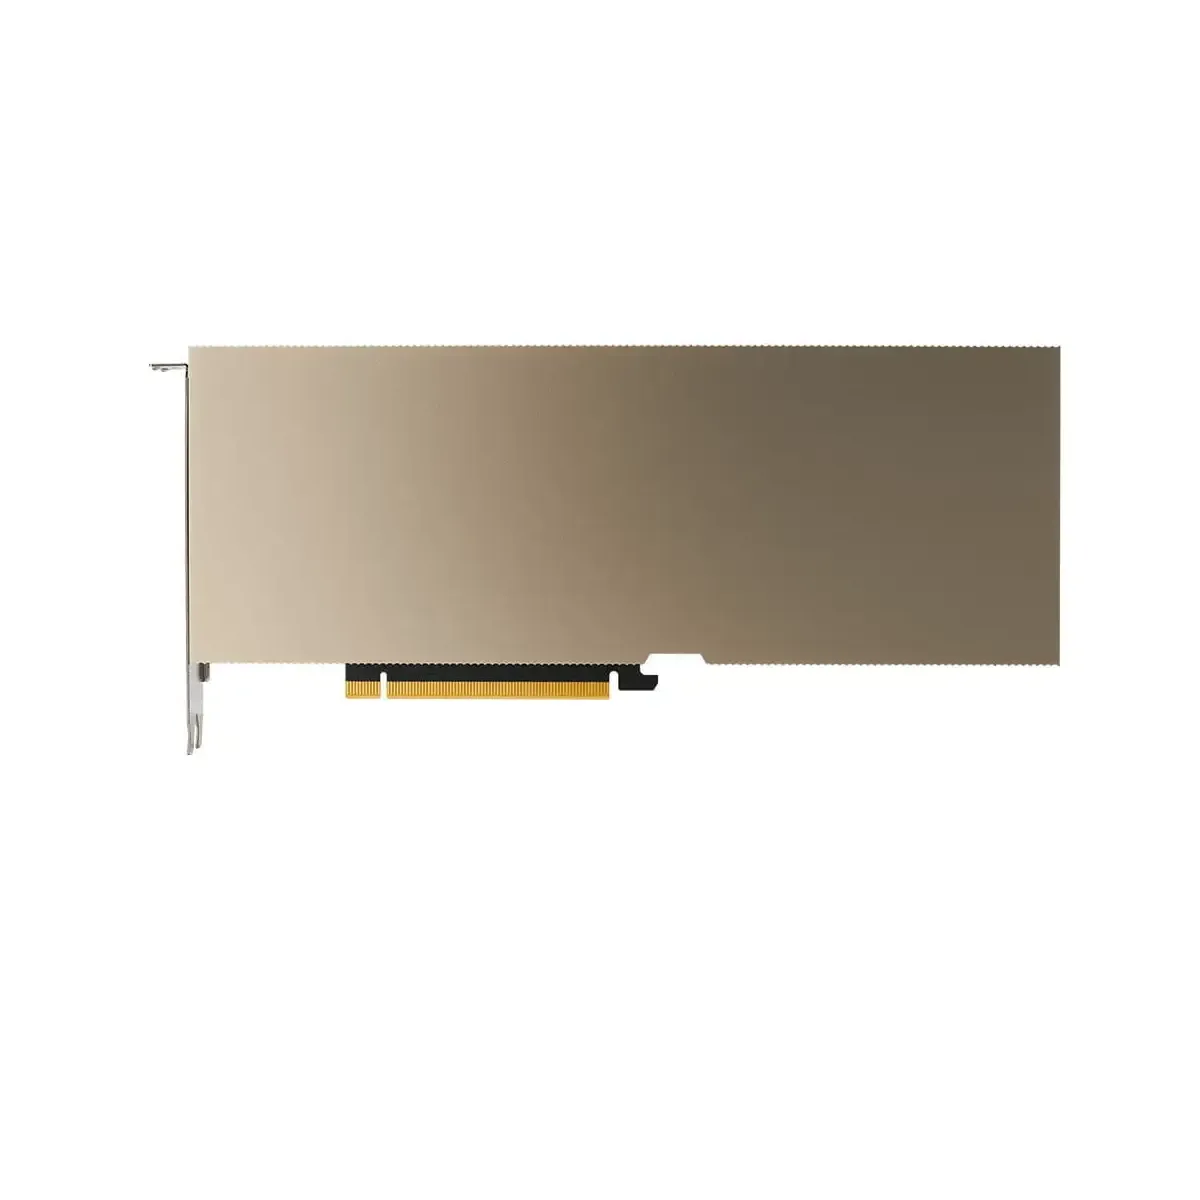 Nvidia A16 - 64GB GDDR6 FH PCIe-x16 GPU Accelerator